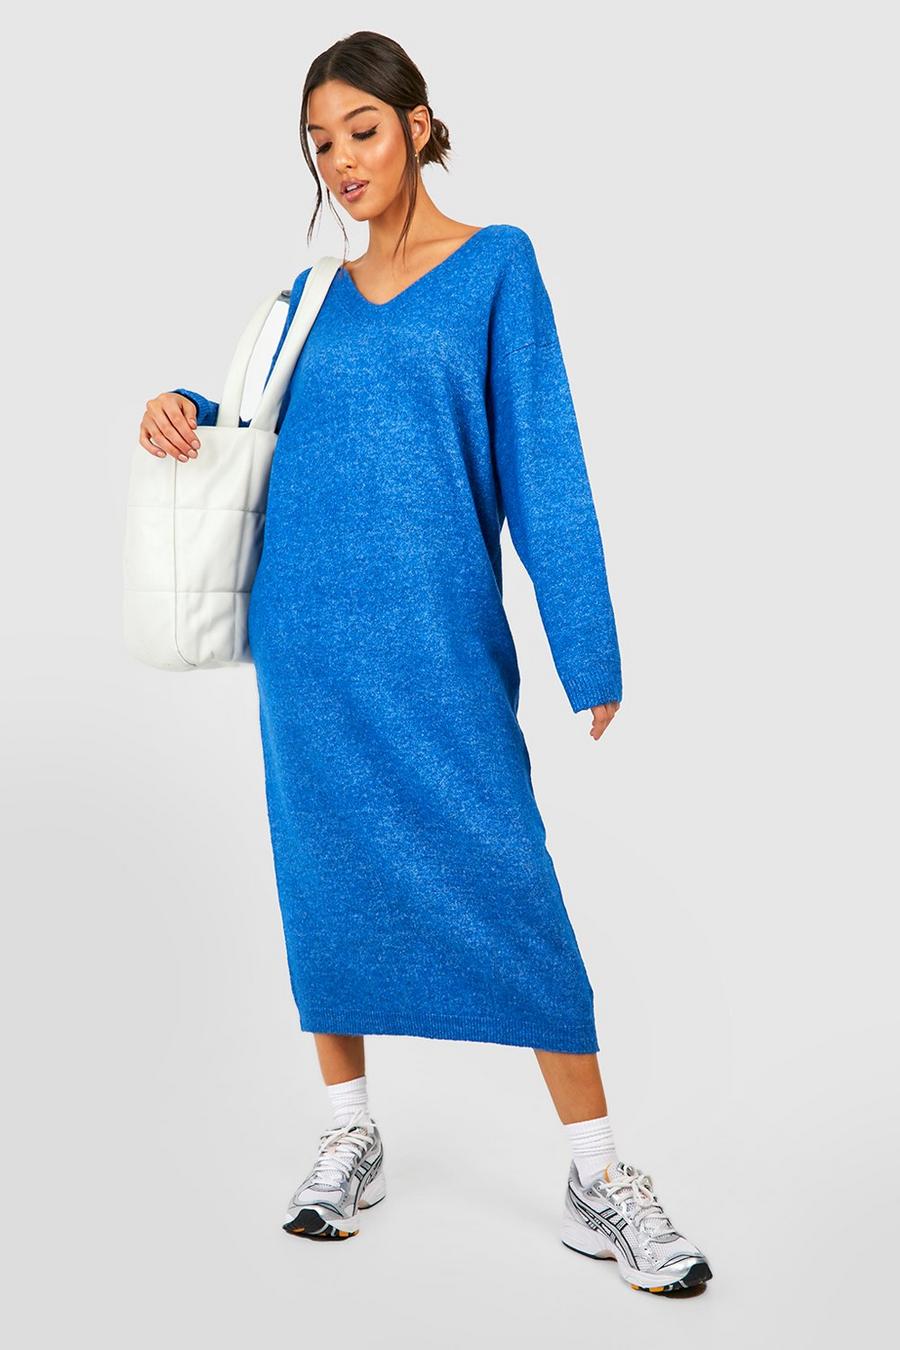 Cobalt blue Slouchy Soft Knit Maxi Knitted Dress